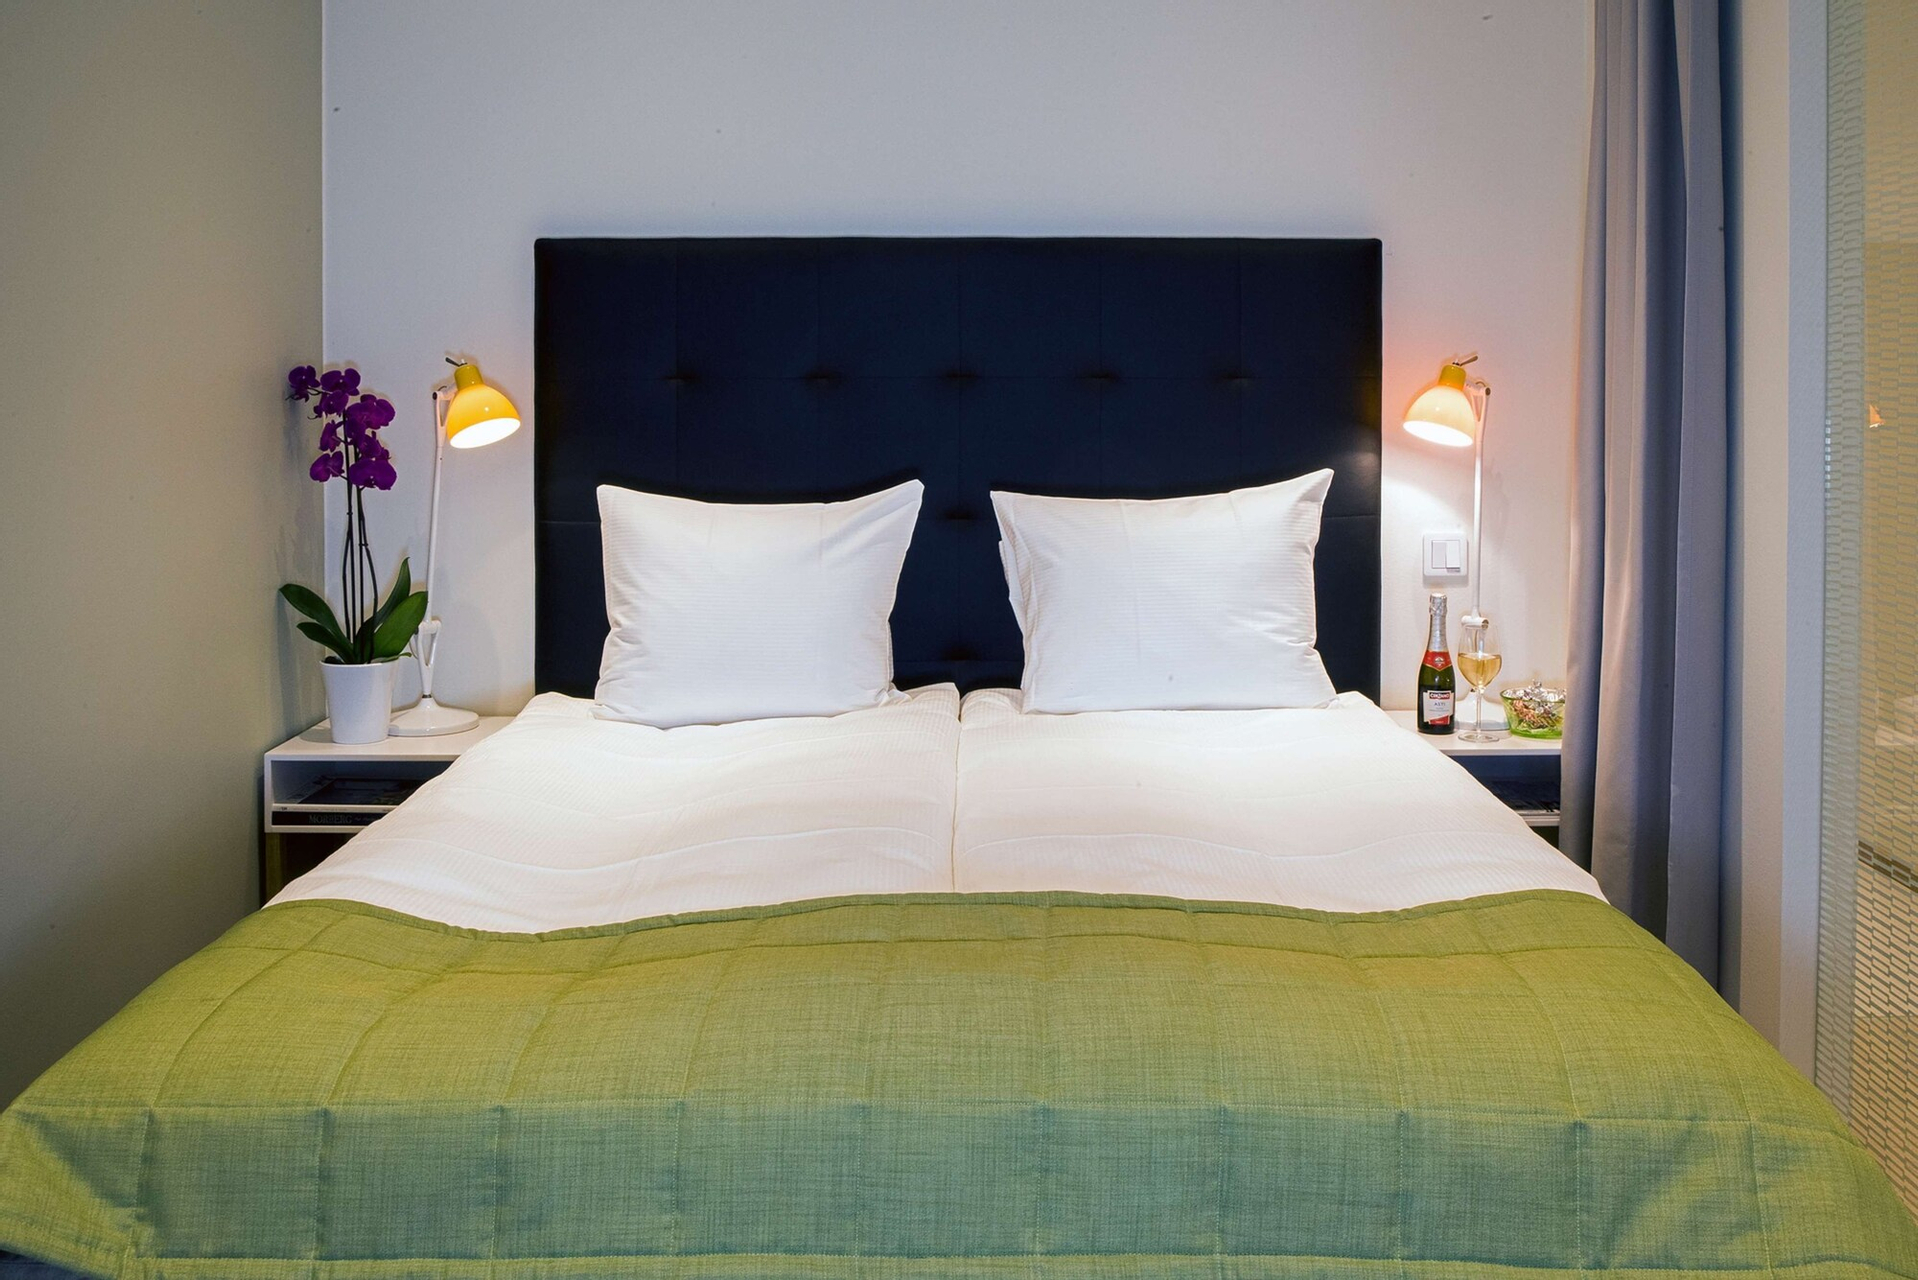 Bedroom 3, Best Western Plus Hotel Planetstaden, Lund